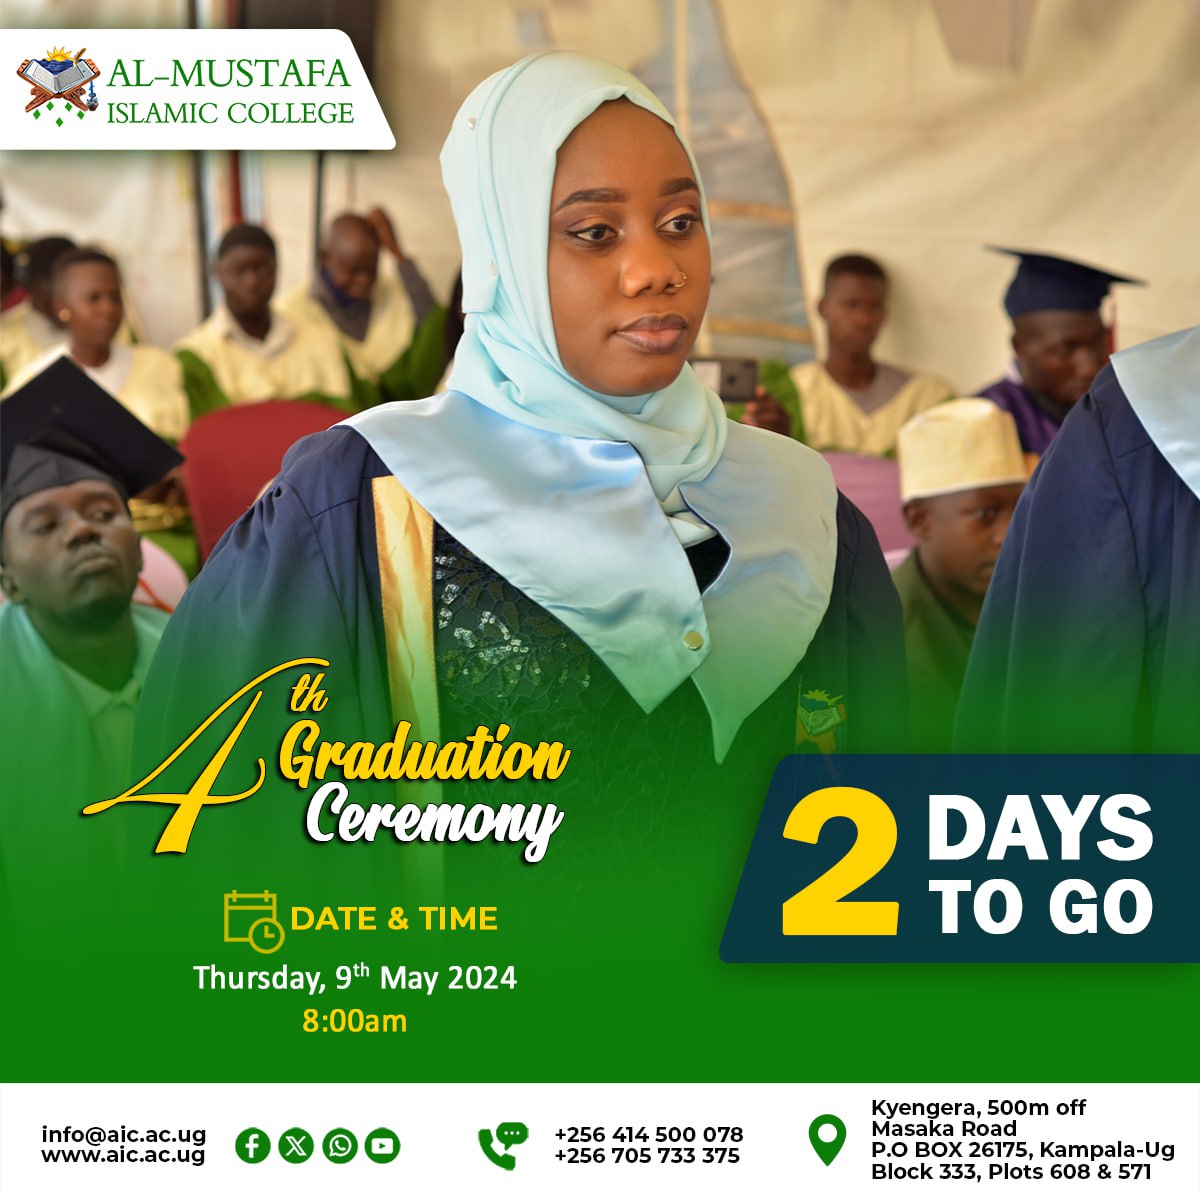 Counting down to our AIC 4th Graduation Ceremony. 2 days to go.
#education #vocationaltraining
@Rukianakadama @OPMUganda @StateHouseUg @UBTEBOfficial @roohallahdehgh1